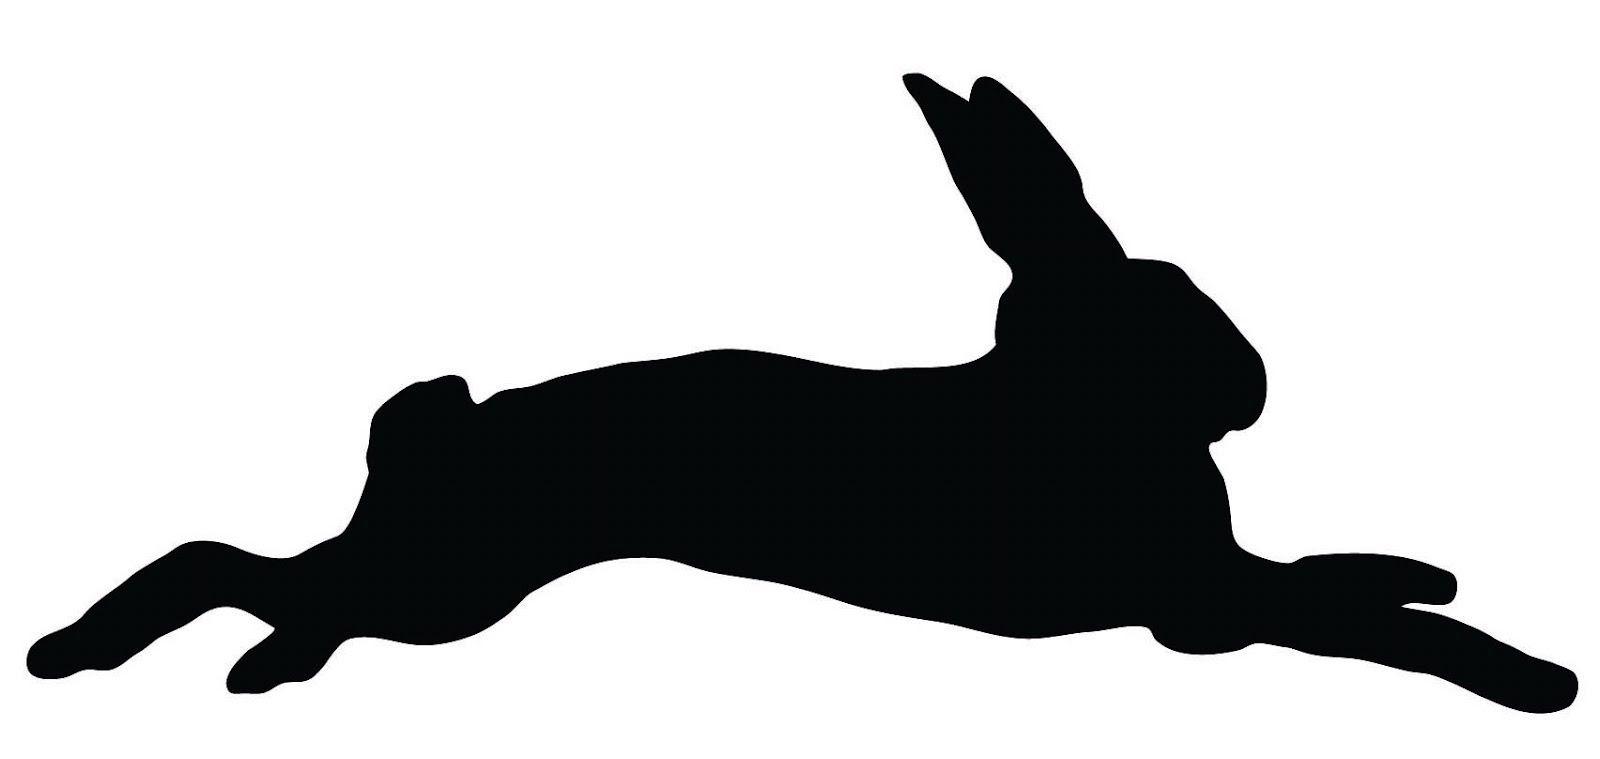 Running Rabbit Logo - Free Fast Rabbit Icon 155396 | Download Fast Rabbit Icon - 155396